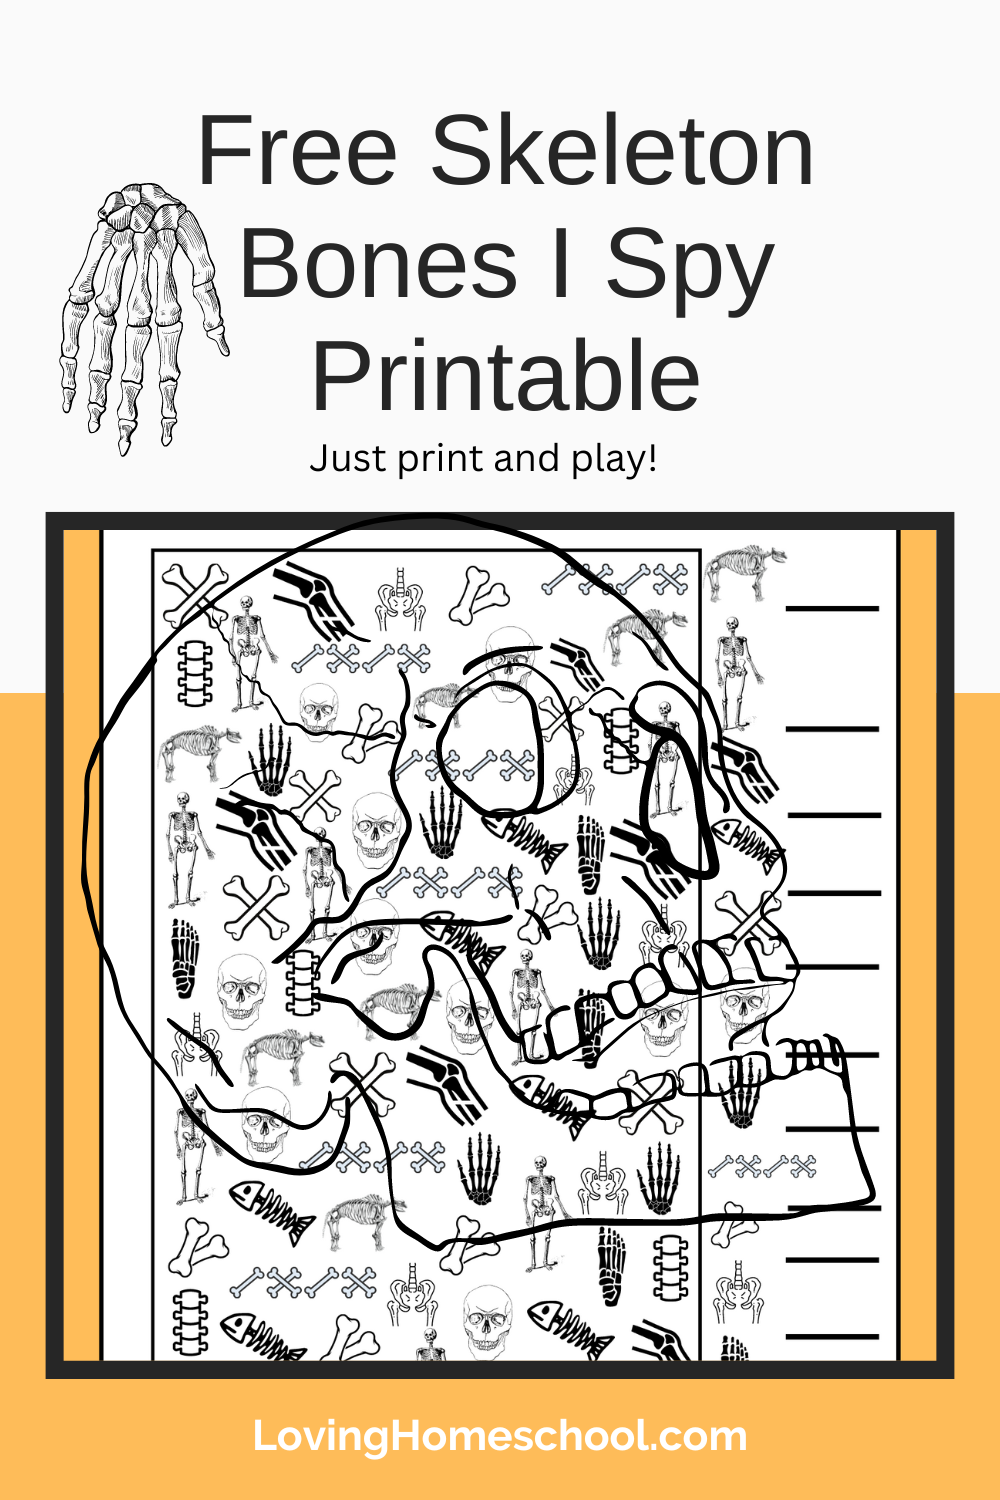 Skeleton Bones I Spy Printable Pinterest Pin